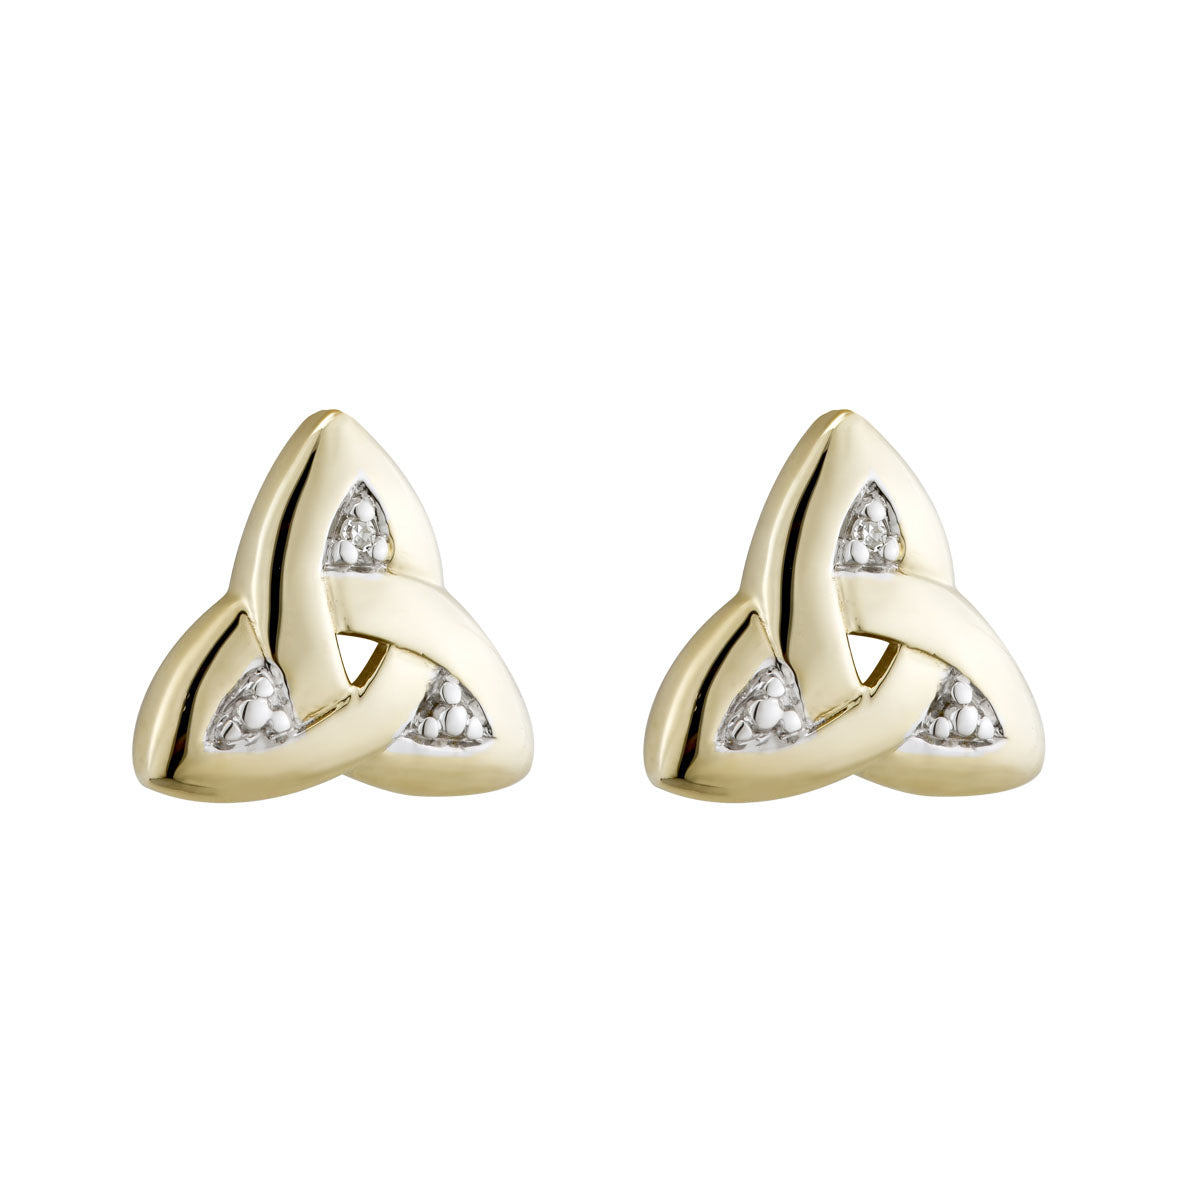 14k gold trinity knot diamond stud earrings s3969 from Solvar